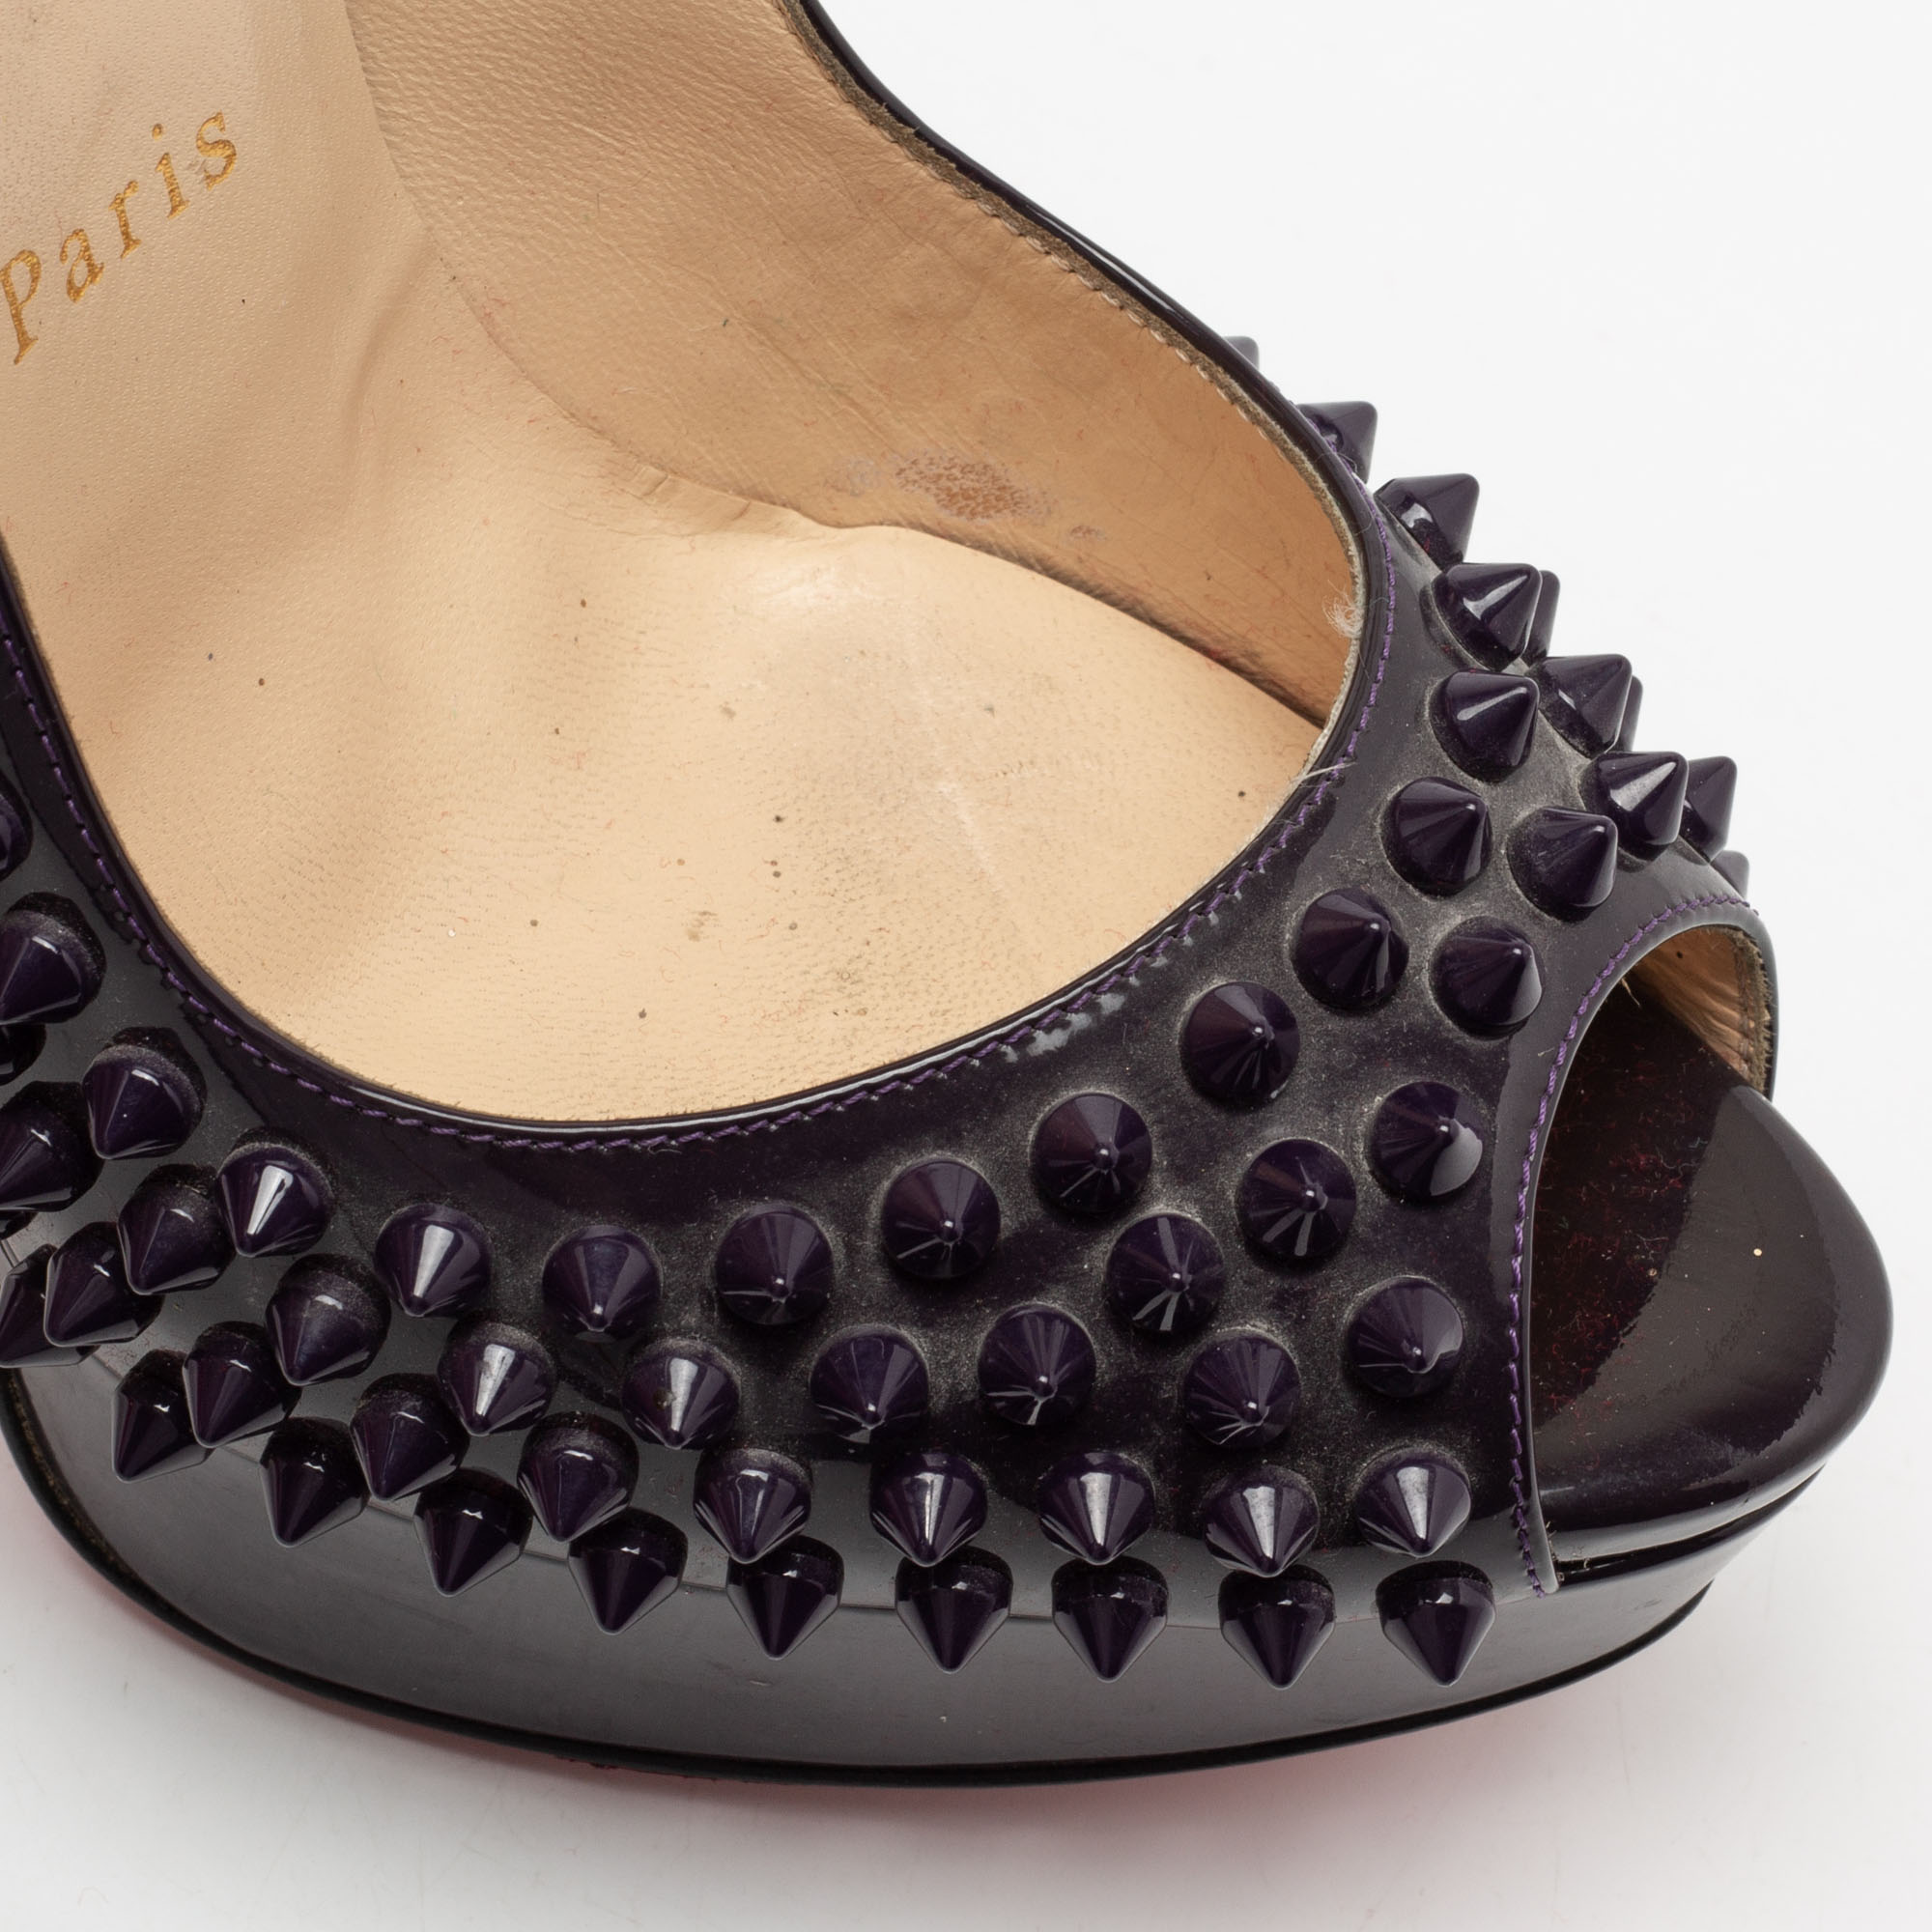 Christian Louboutin Dark Purple Patent Leather Lady Peep-Toe Spiked Platform Pumps Size 36